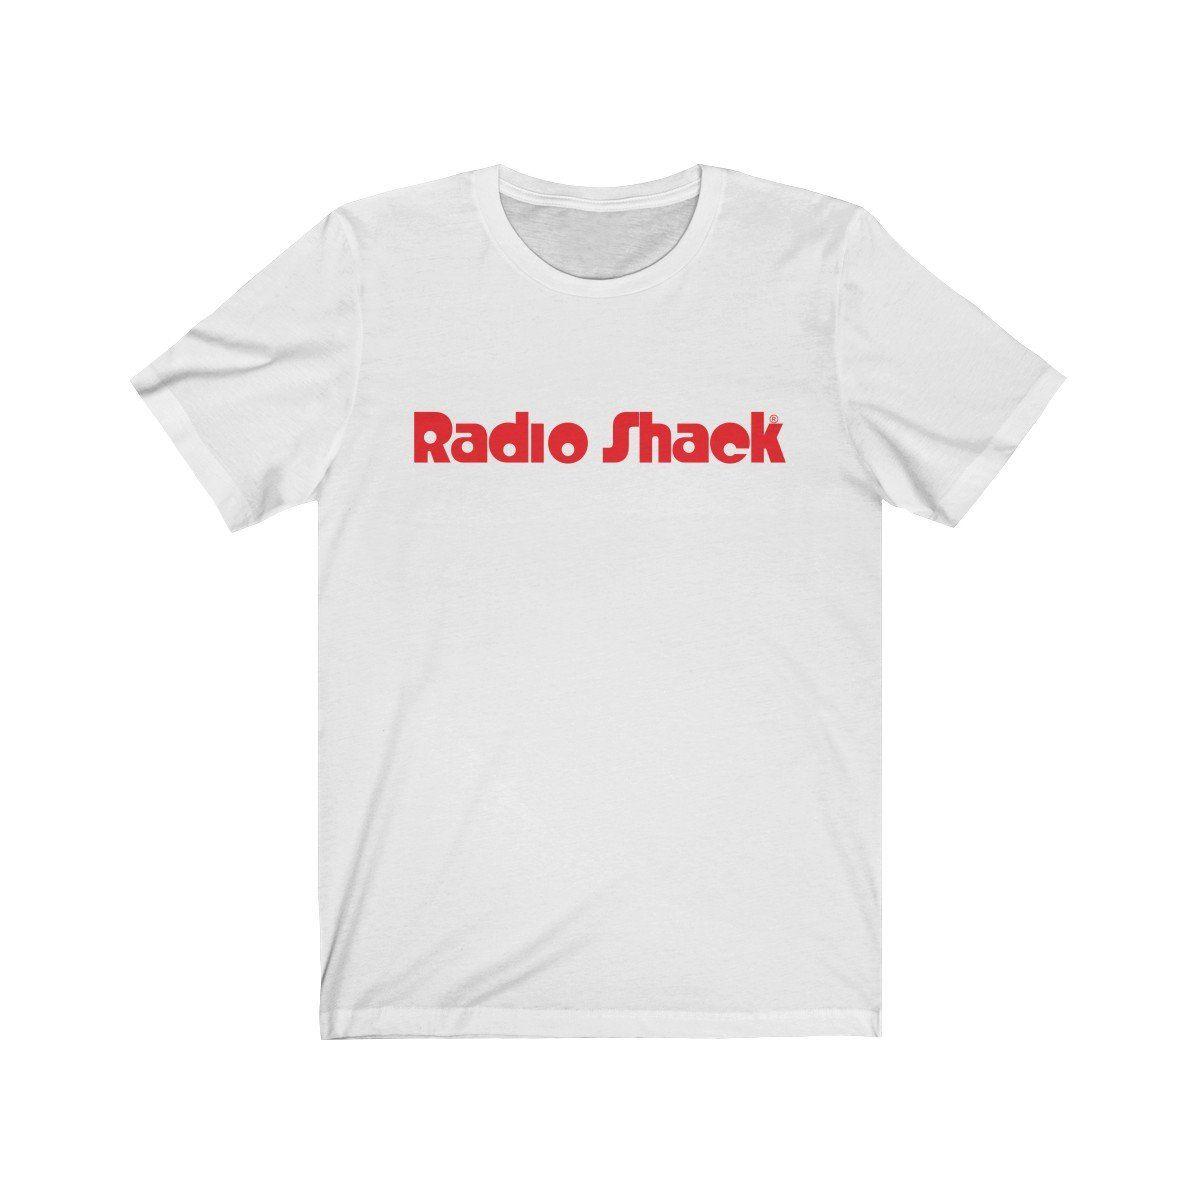 Radio Shack Logo - Retro RadioShack T-Shirt with Horizontal Logo